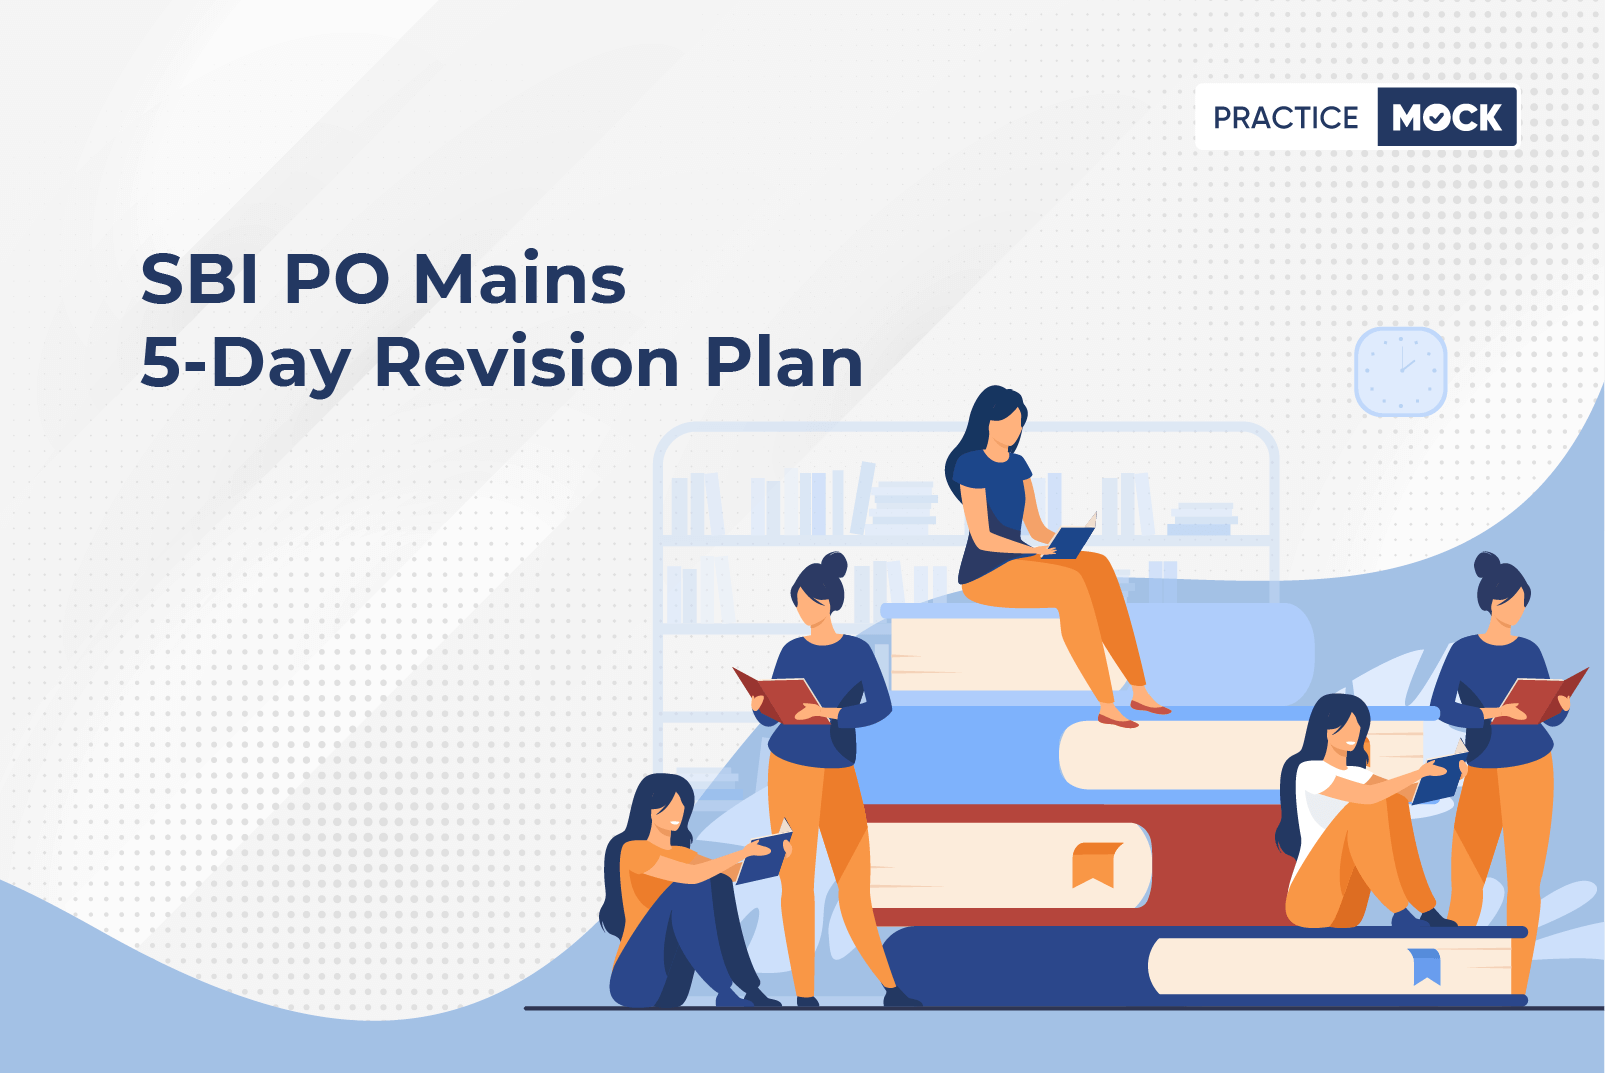 SBI PO Mains Revision Plan